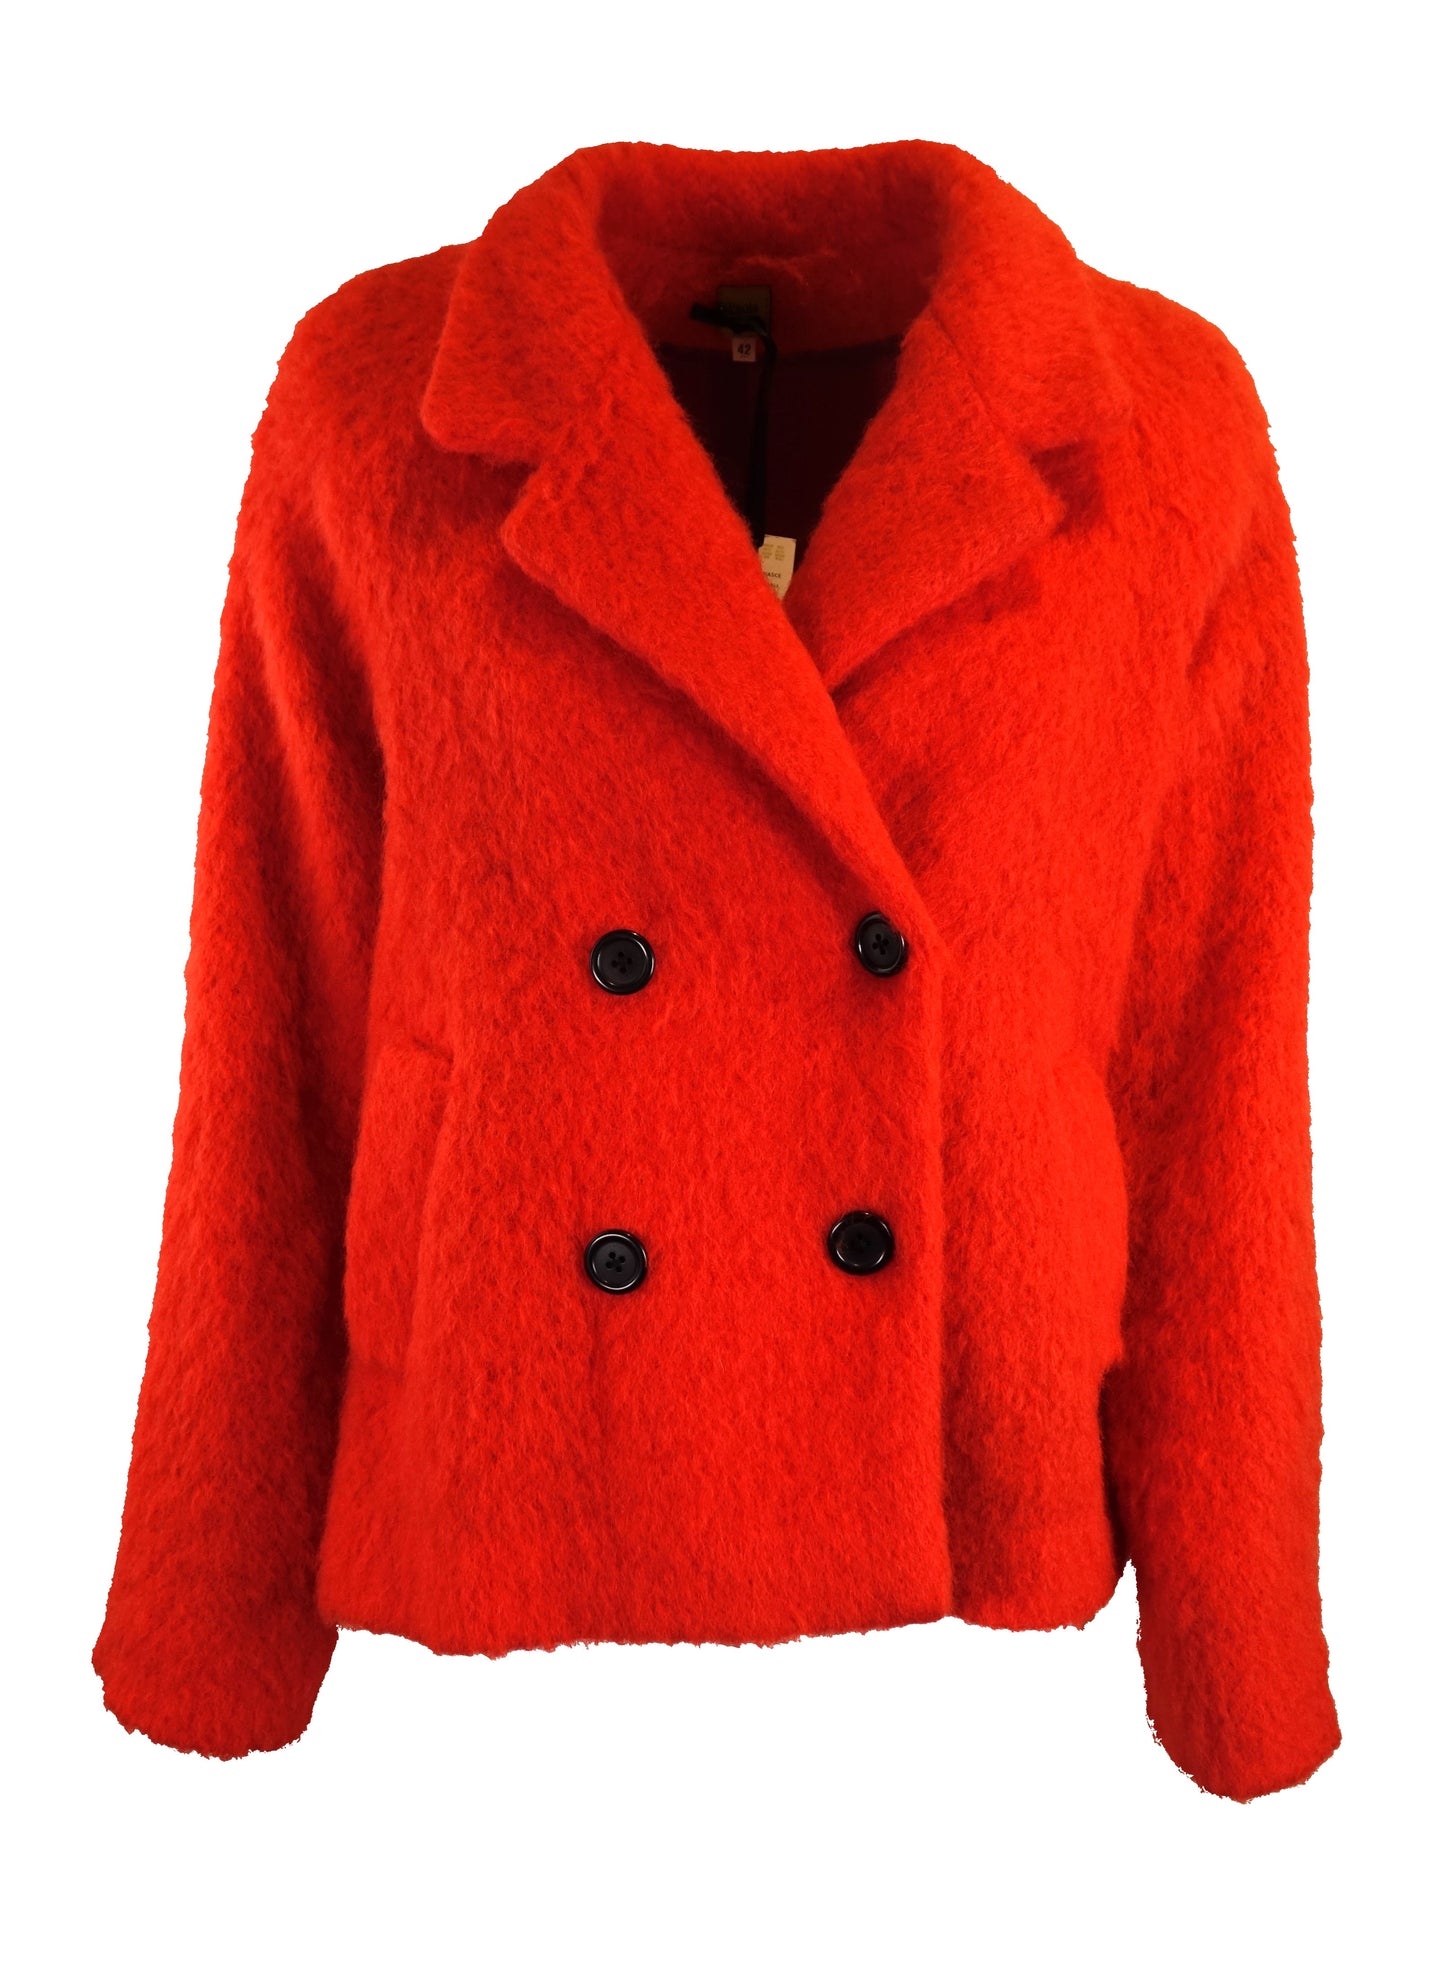 Brest jacket in strong orange wool/mohair